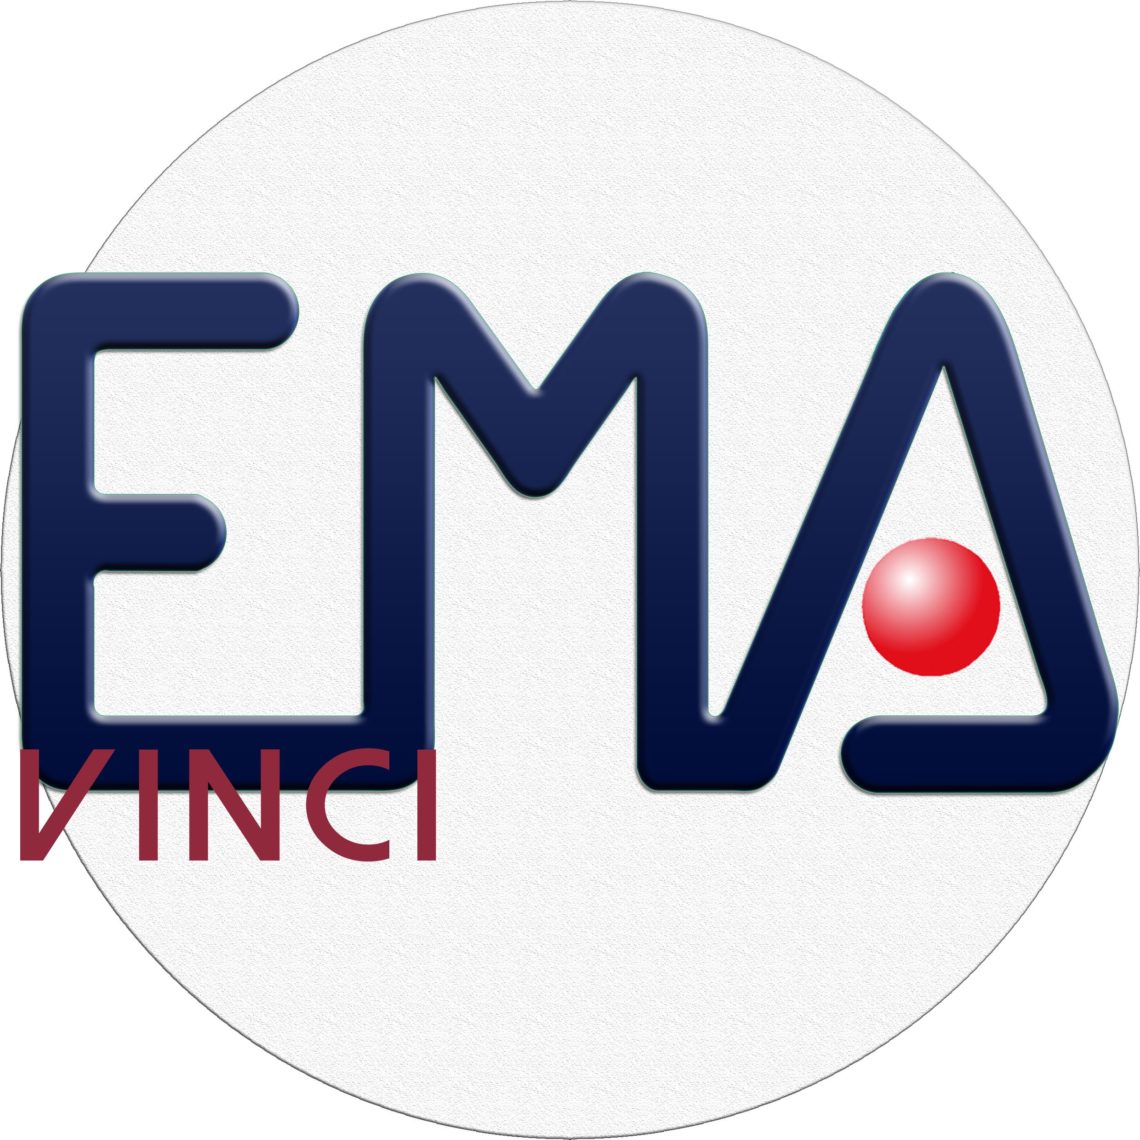 nel 1993 fonda la EMA Vinci